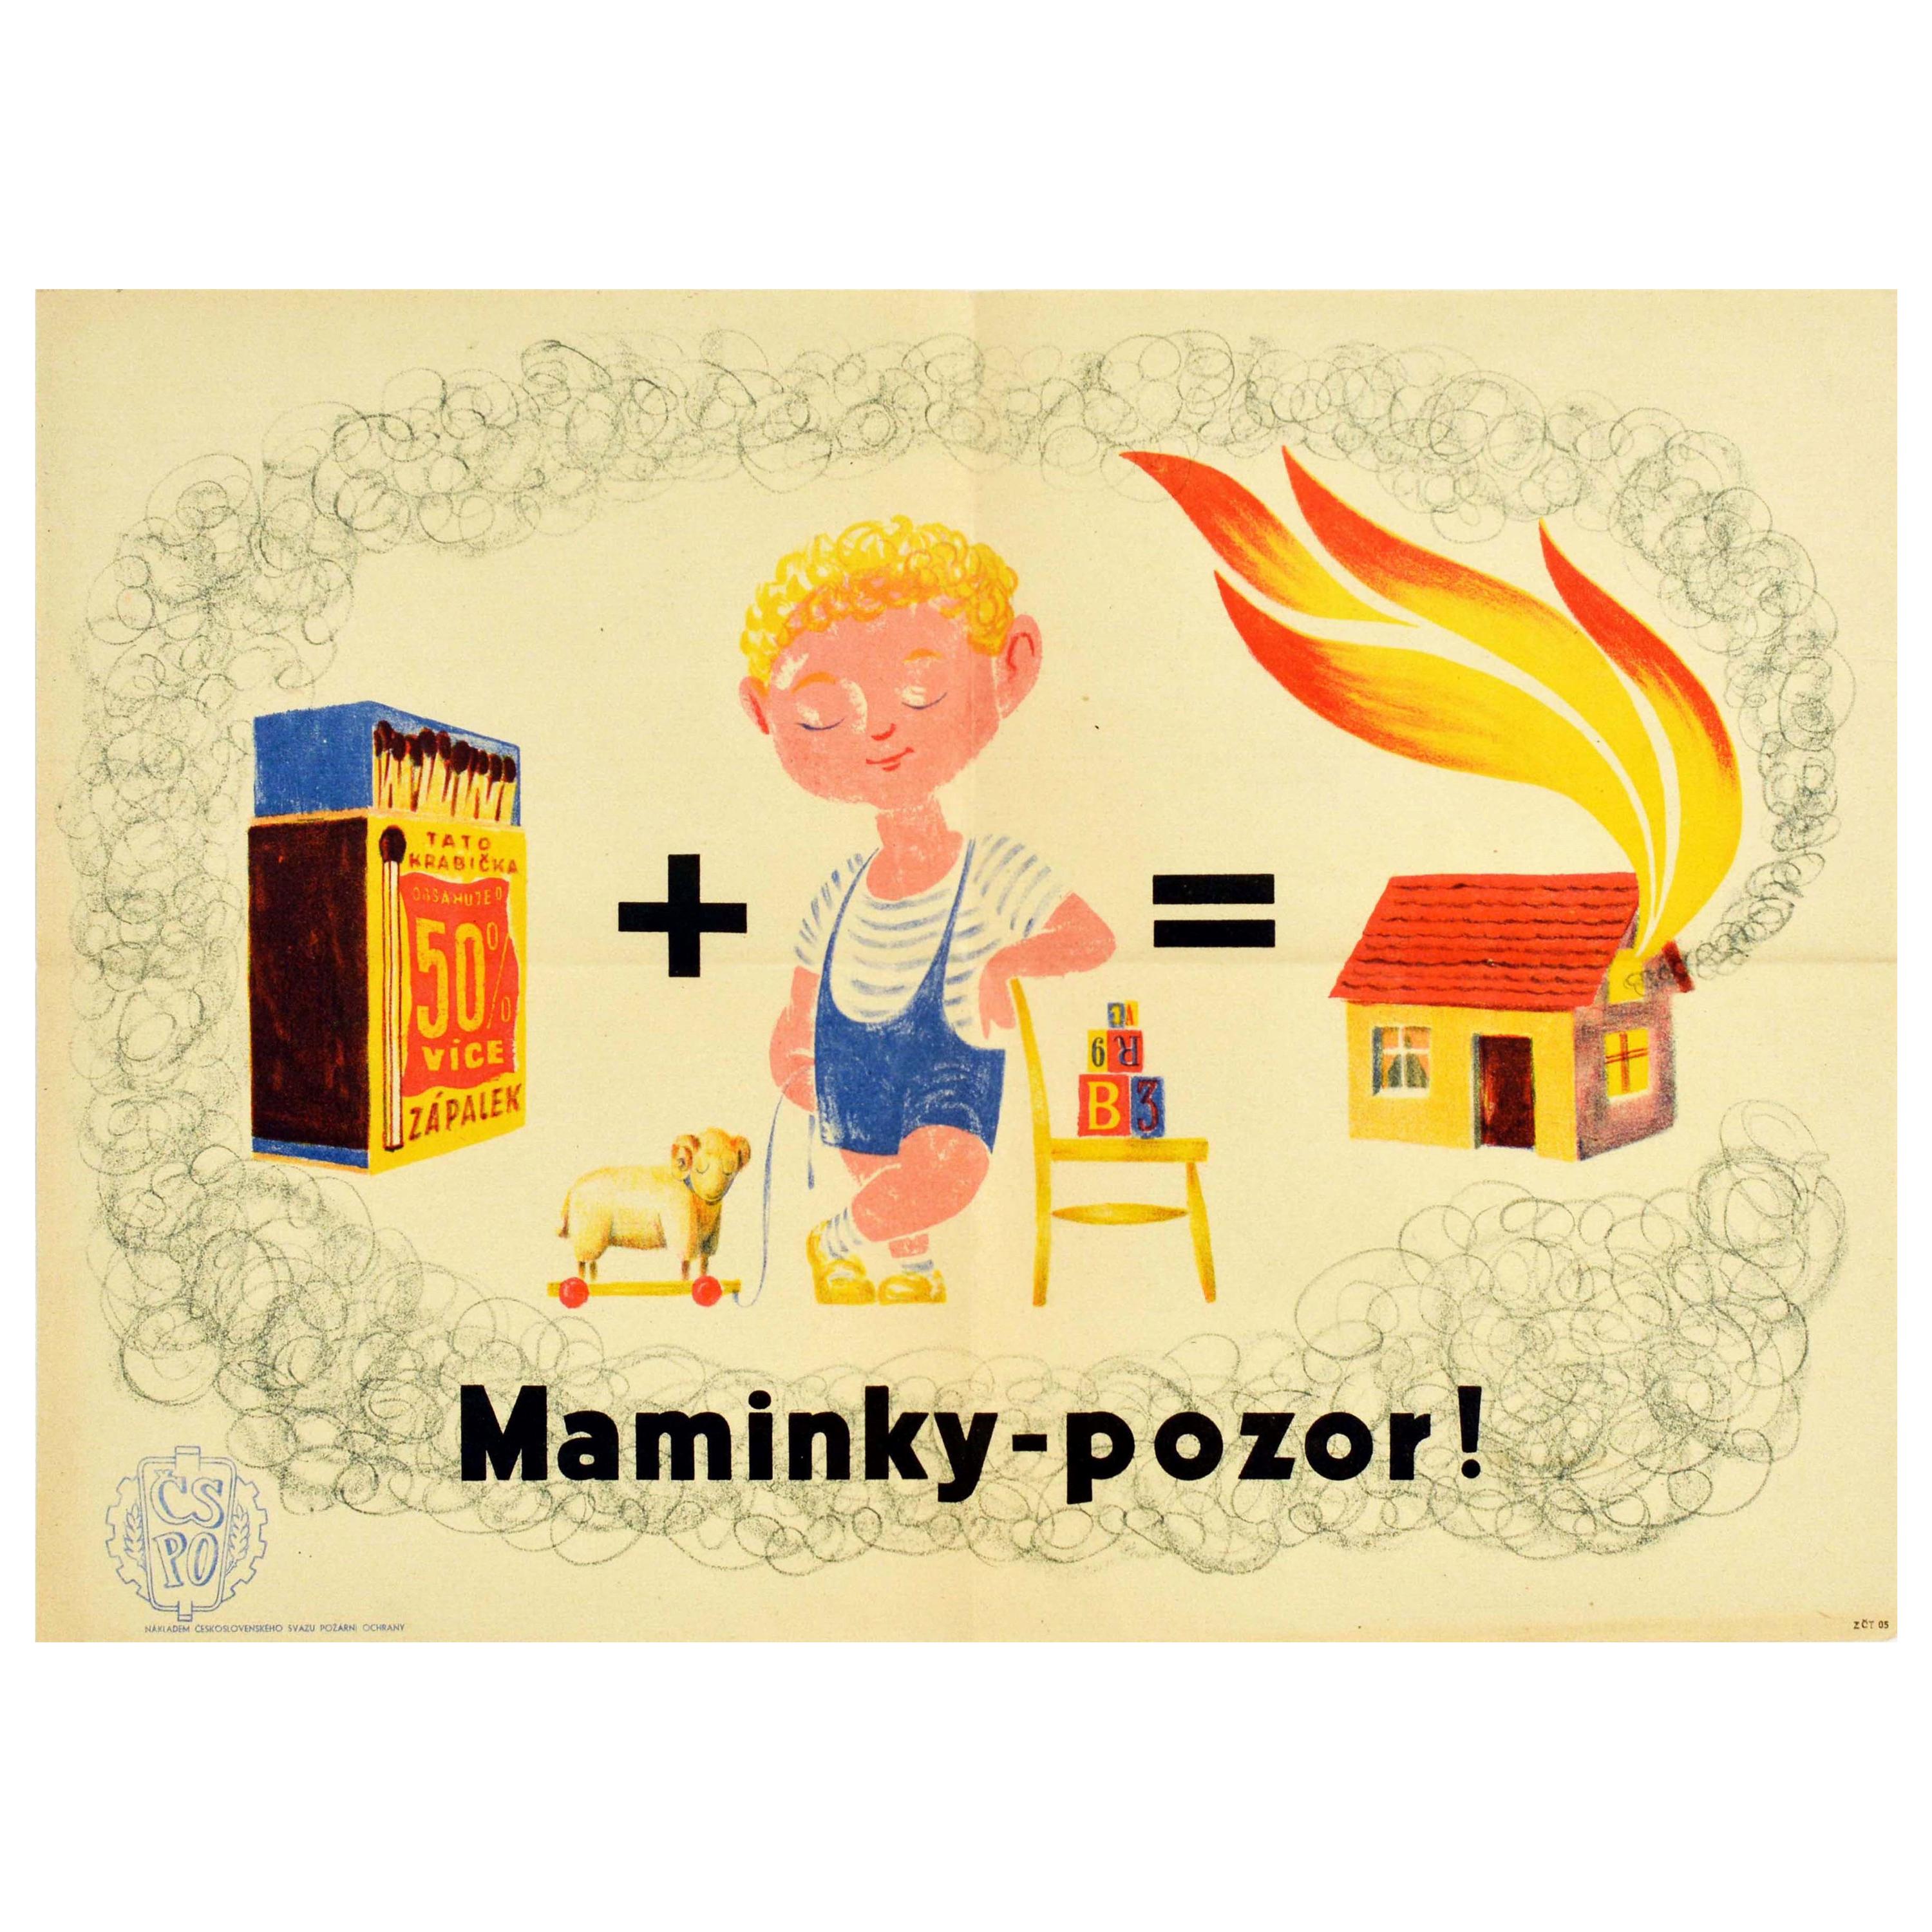 Original Vintage Fire Safety Poster Mothers Caution Danger Matches Child Warning